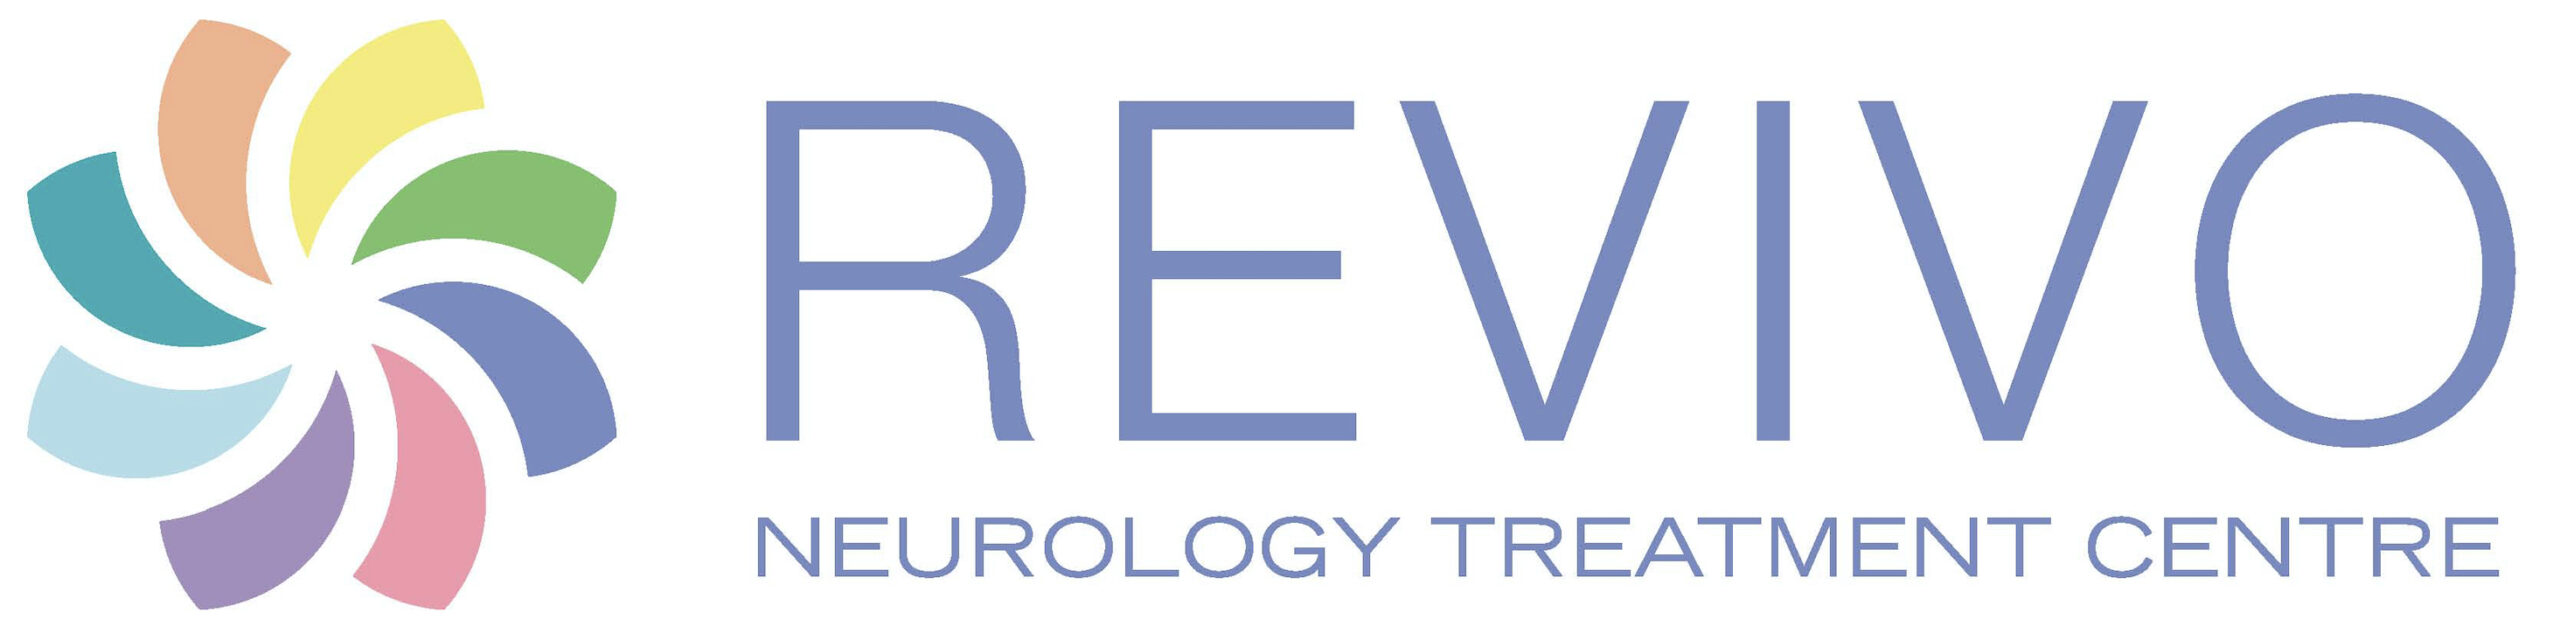 Revivo Neurology Treatment Center